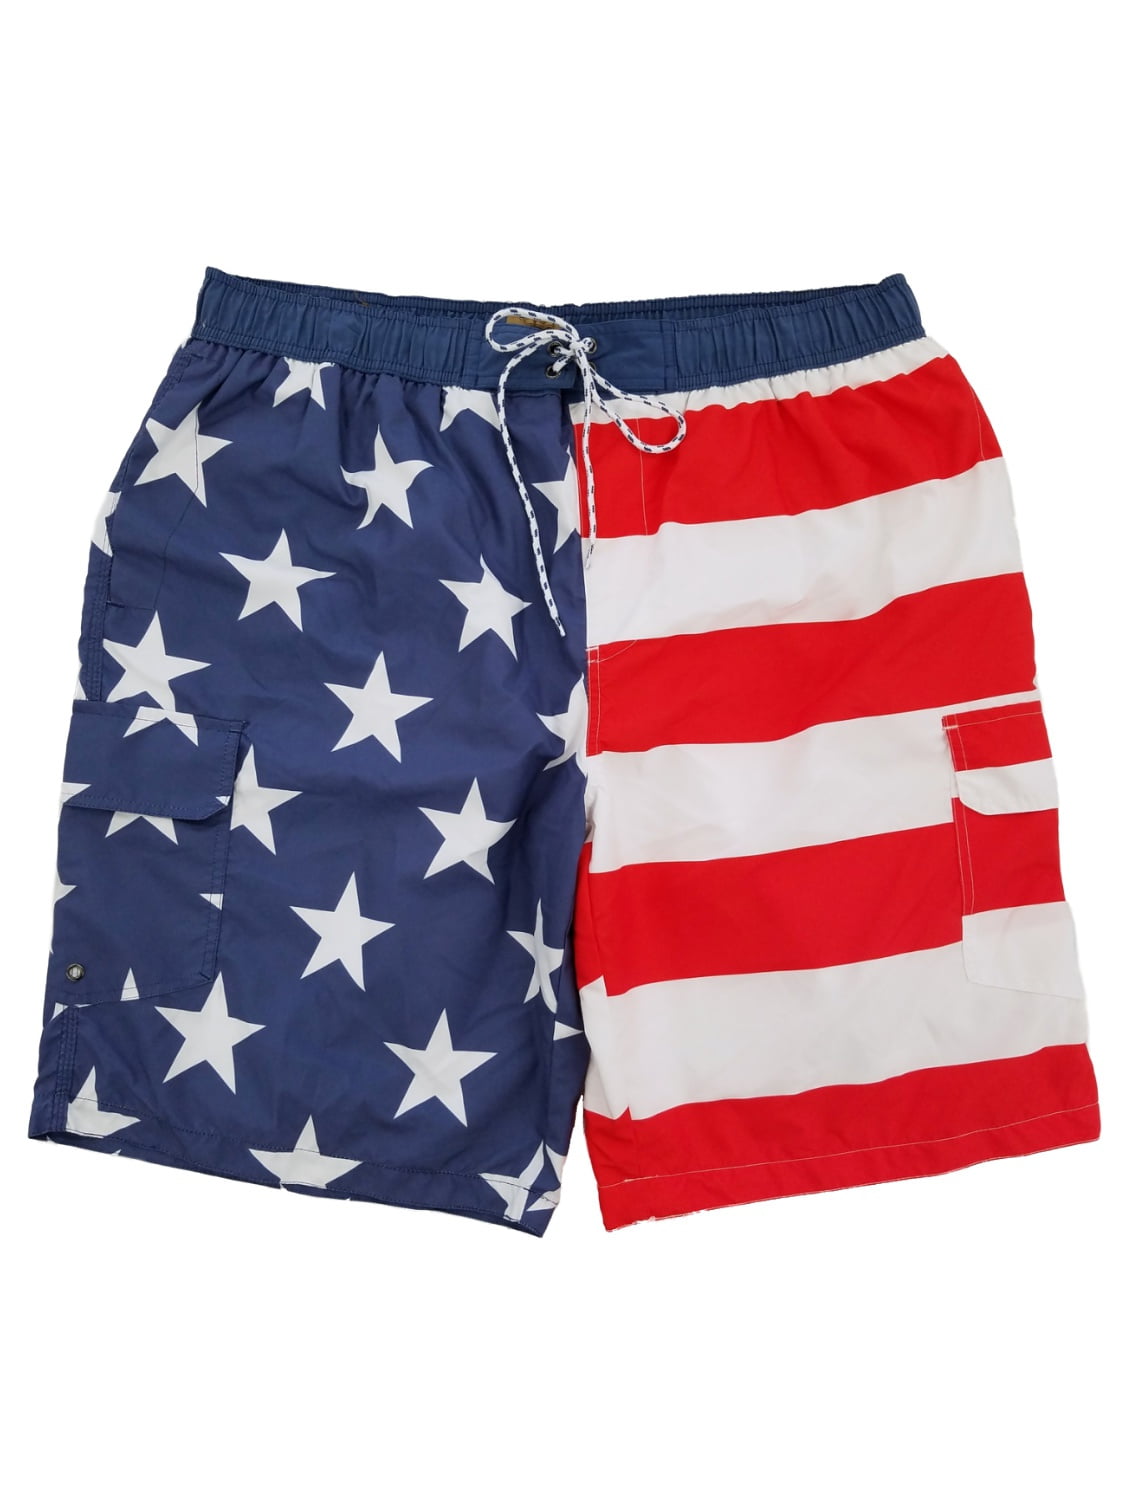 Short american. Американские шорты мужские. Плавки с американским флагом. Шорты в американском стиле. Шорты USA мужские.